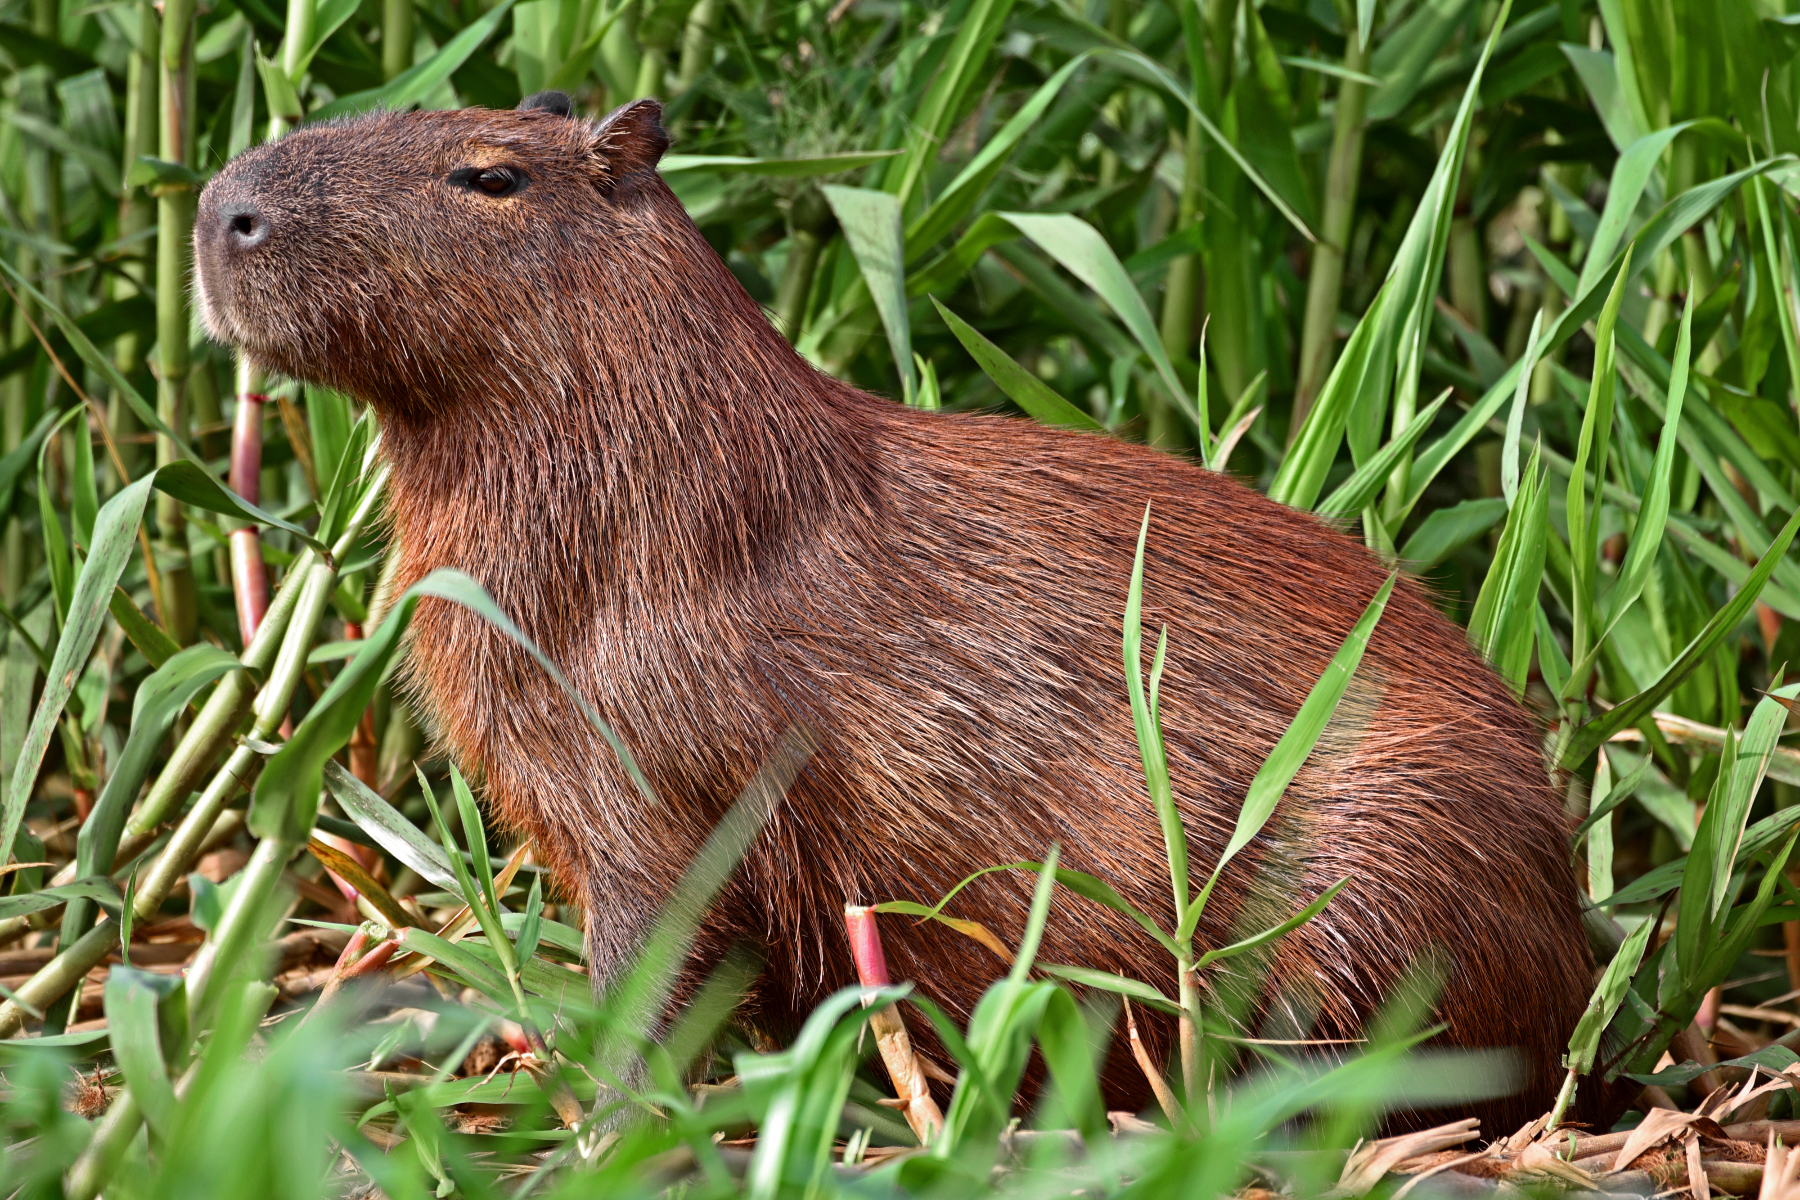 Capybara is on tall grasses